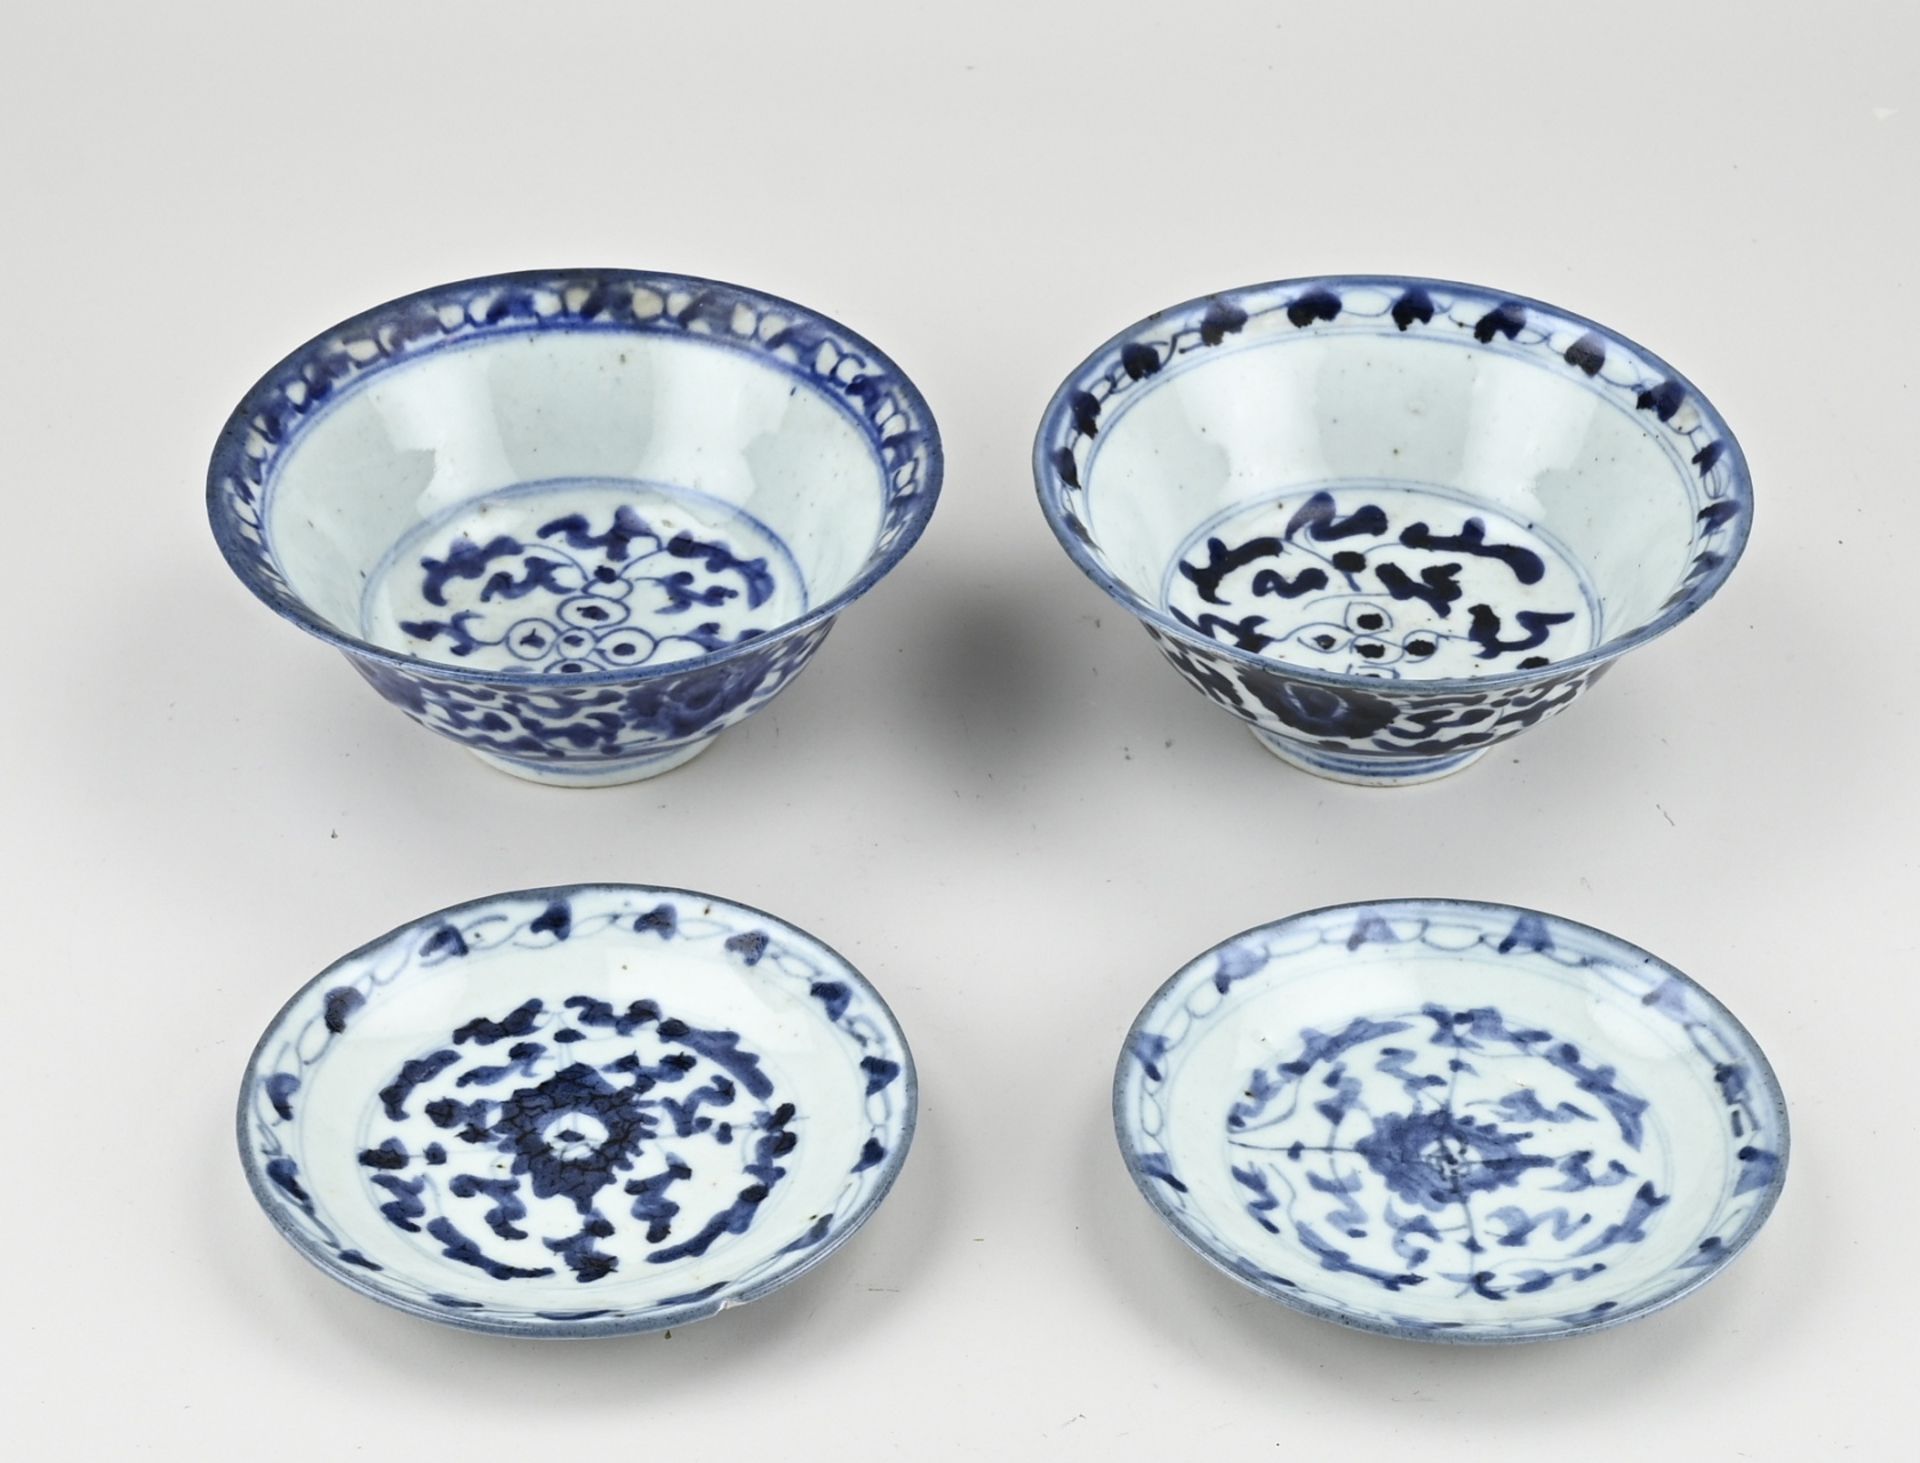 2x Chinese bowl + lids